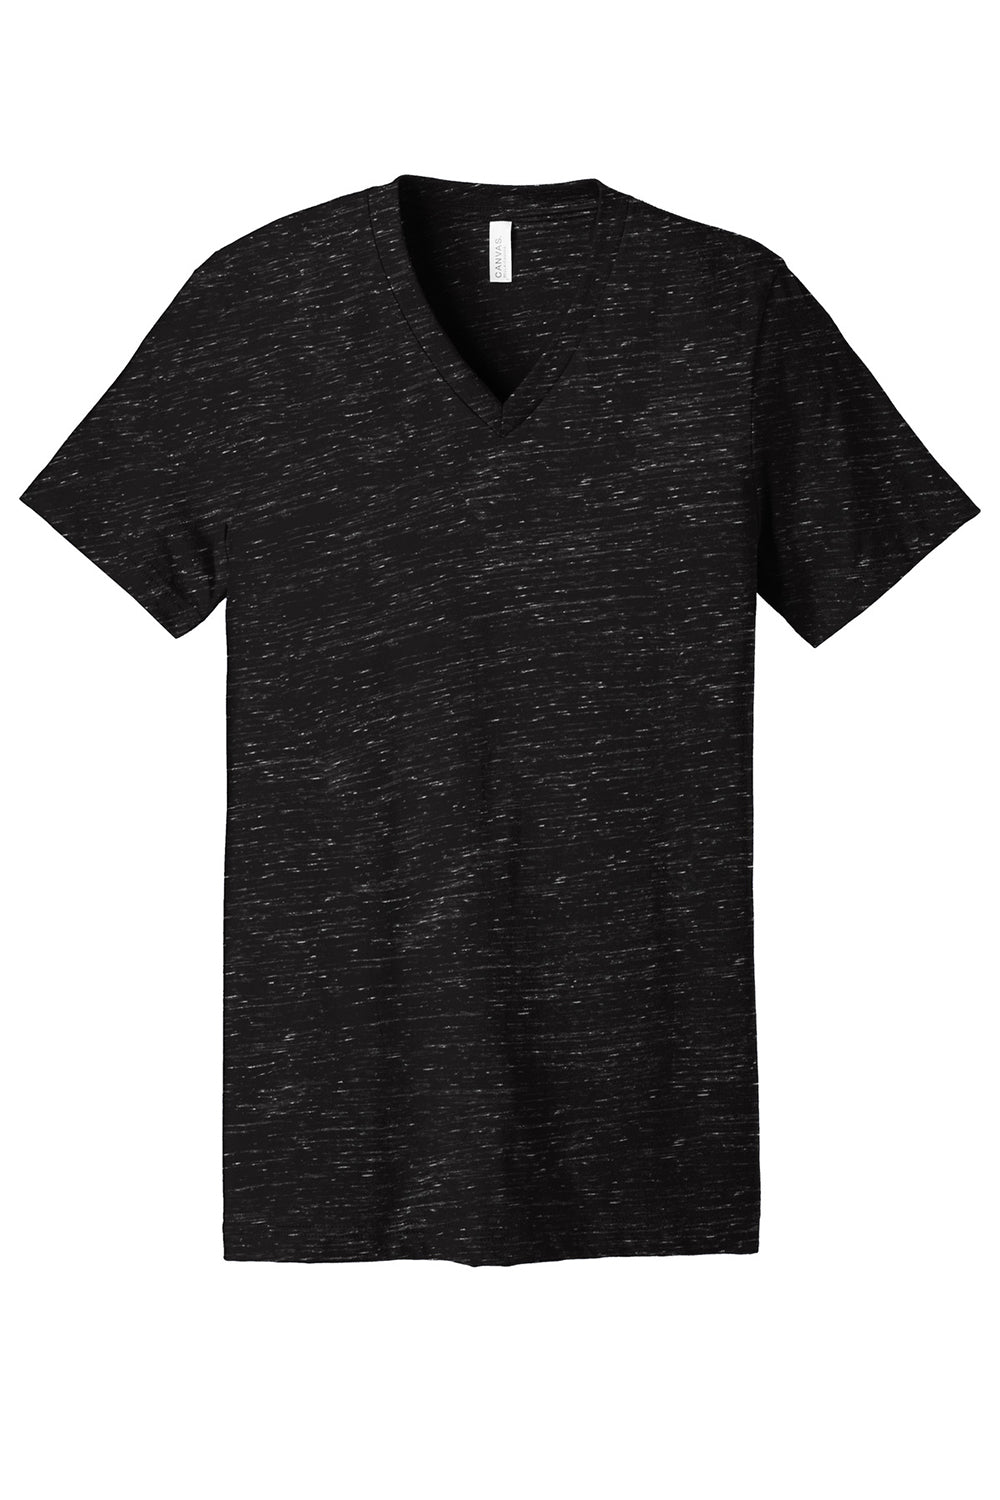 Bella + Canvas BC3655/3655C Mens Textured Jersey Short Sleeve V-Neck T-Shirt Black Marble Flat Front